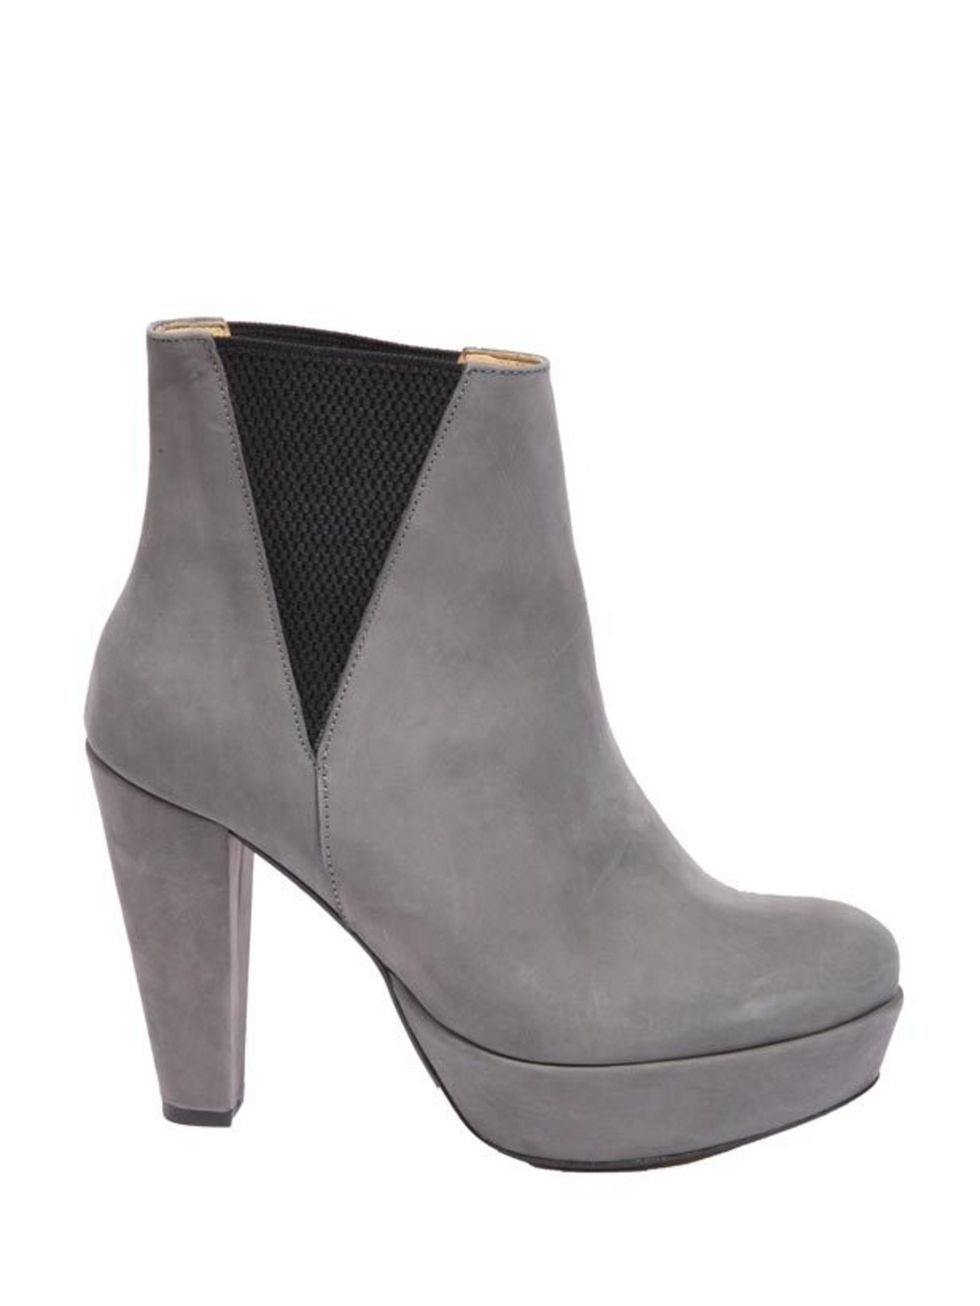 <p>Dico Copenhagen grey Chelsea boots, £215, at <a href="http://www.urbanoutfitters.co.uk/dico-copenhagen-grey-platform-chelsea-boot/invt/5318426363893/&amp;bklist=icat,5,shop,womens,shoes,wboots">Urban Outfitters</a> </p>